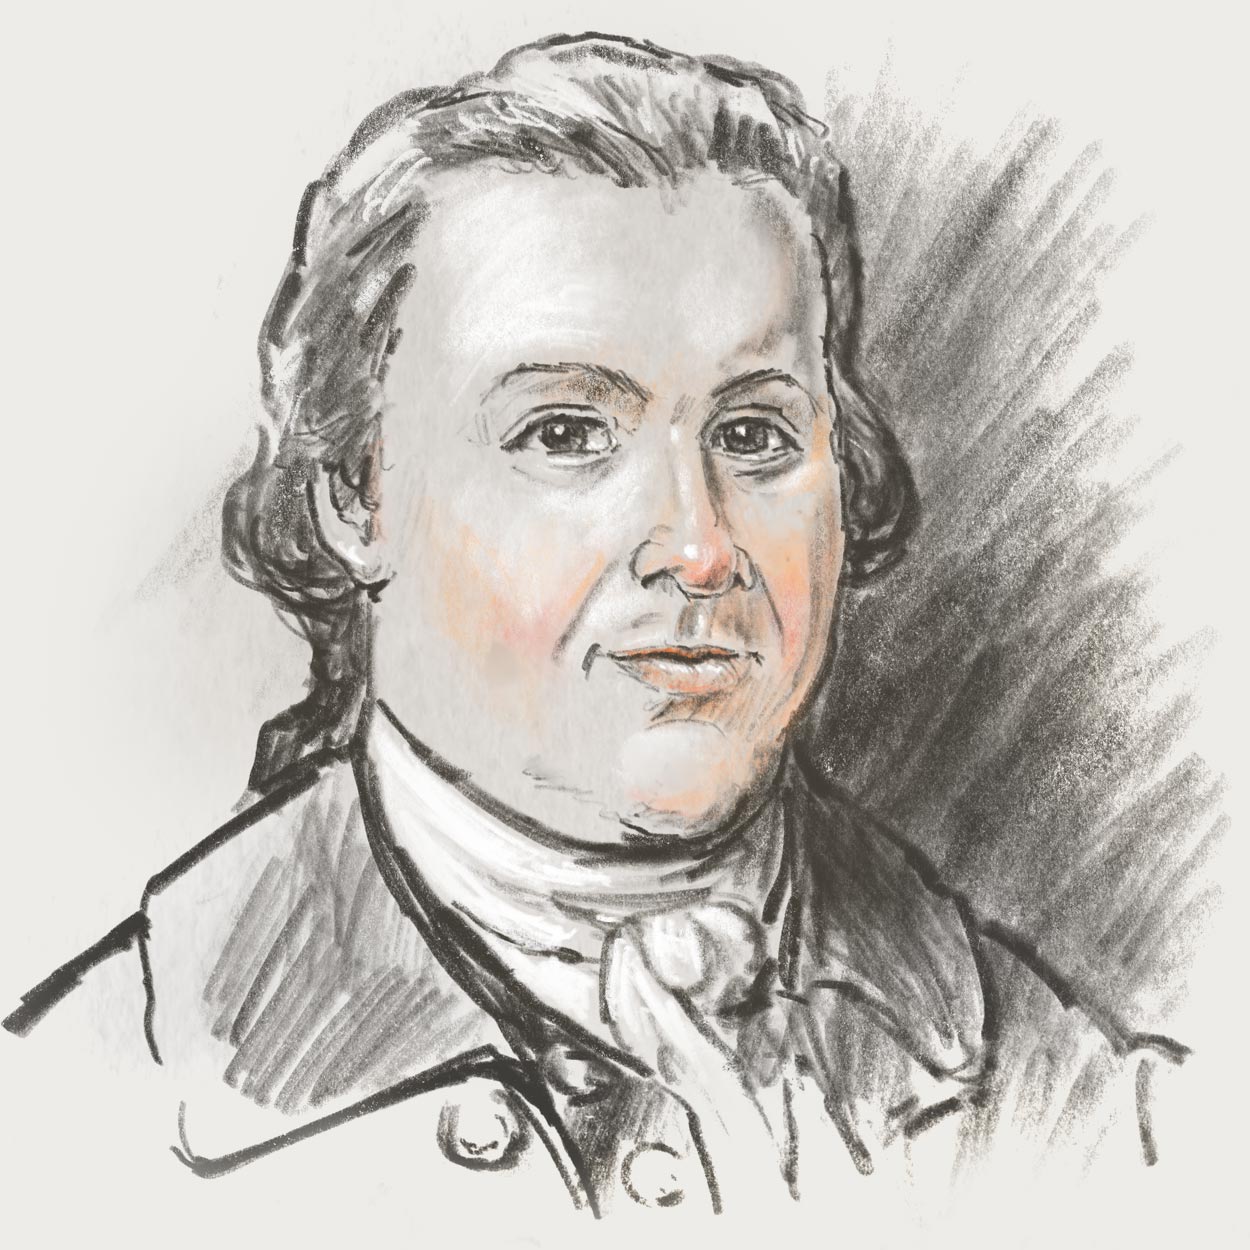 Drawn portrait of Button Gwinnett